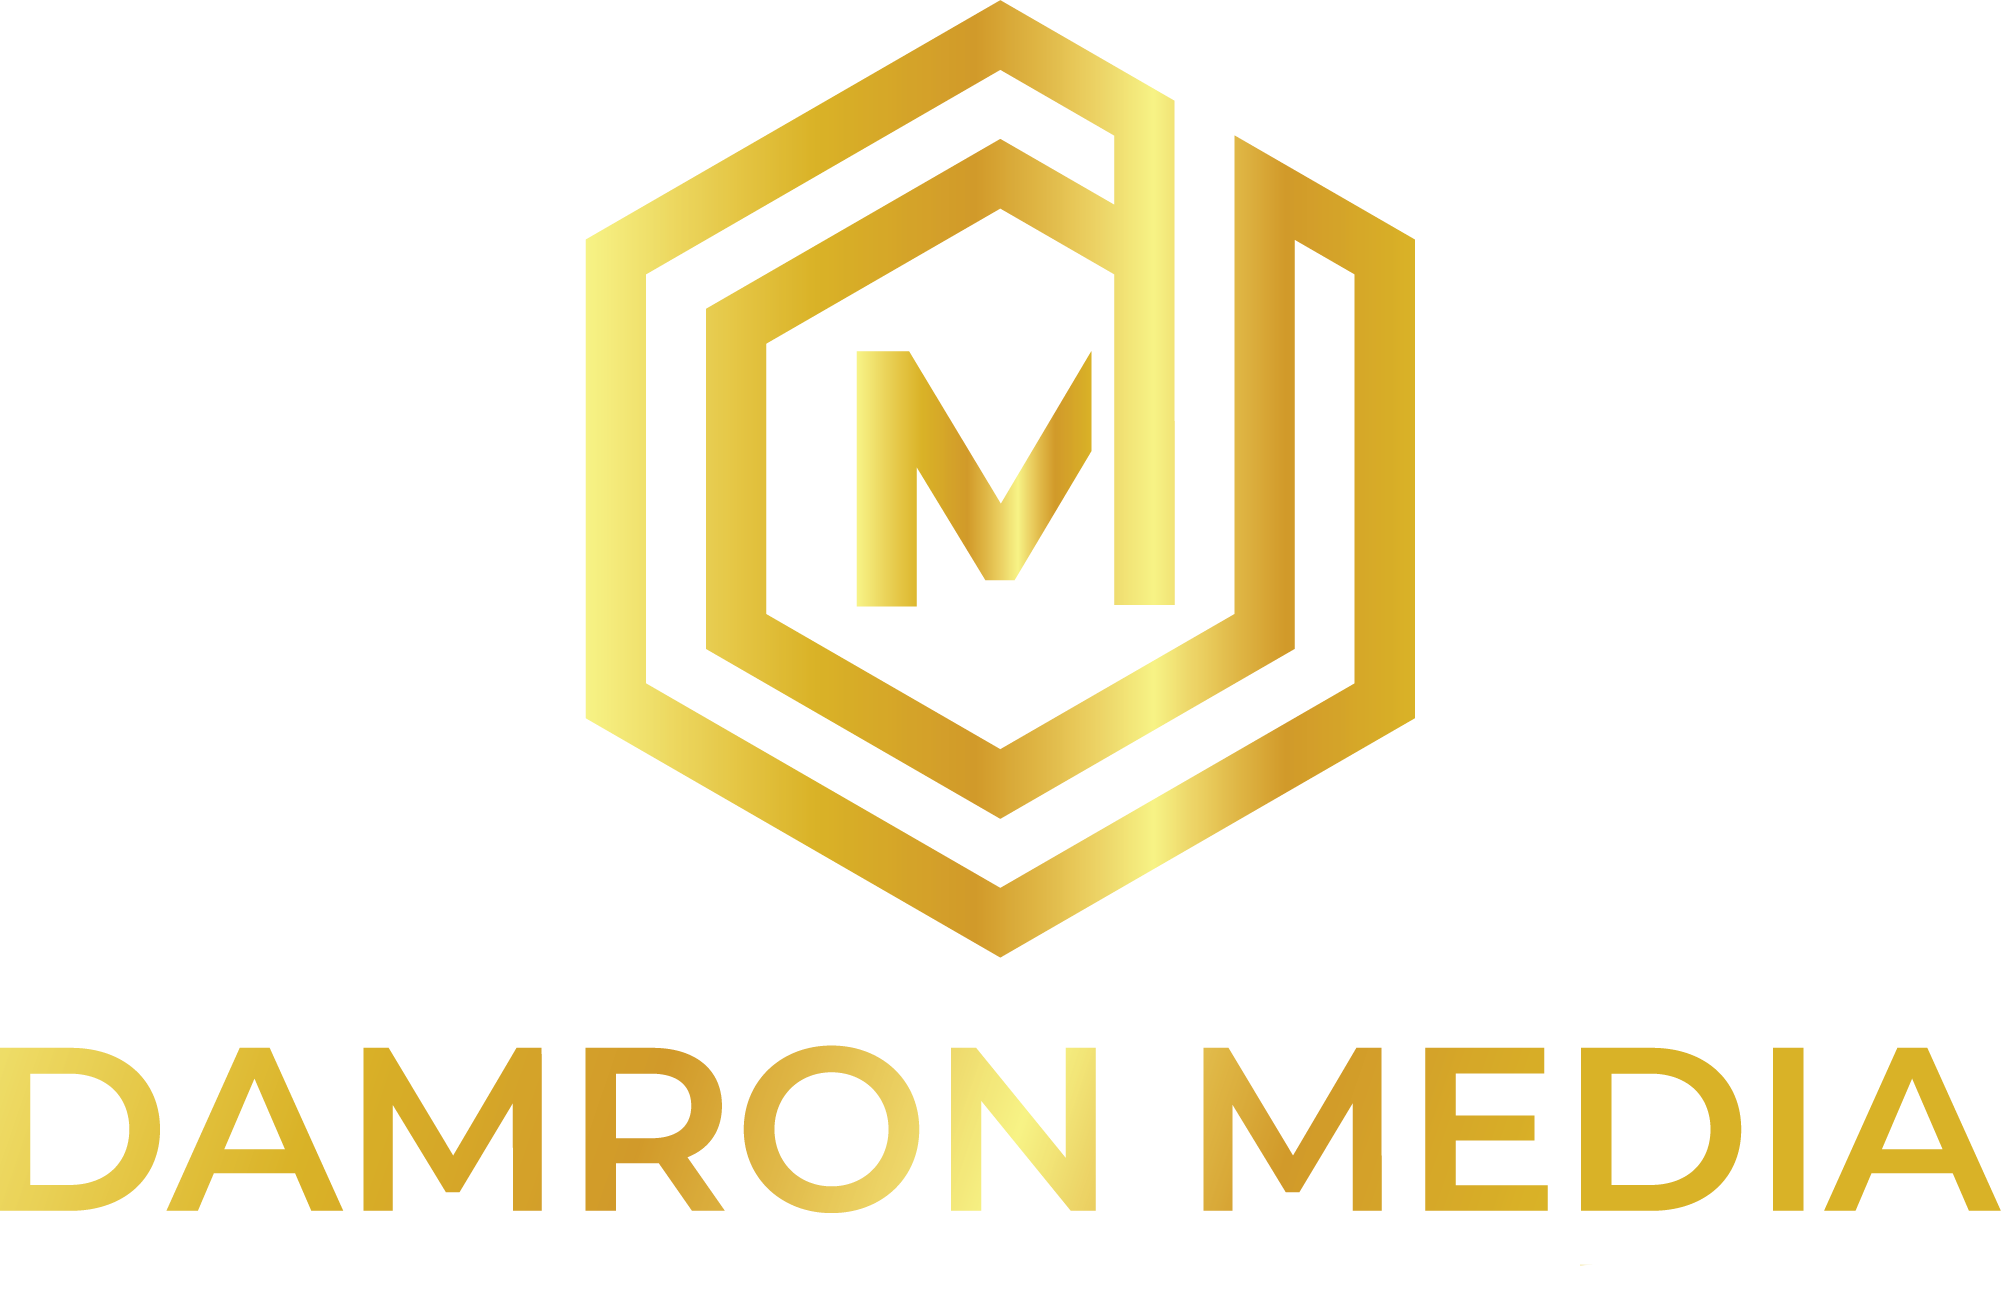 DM-logo-3